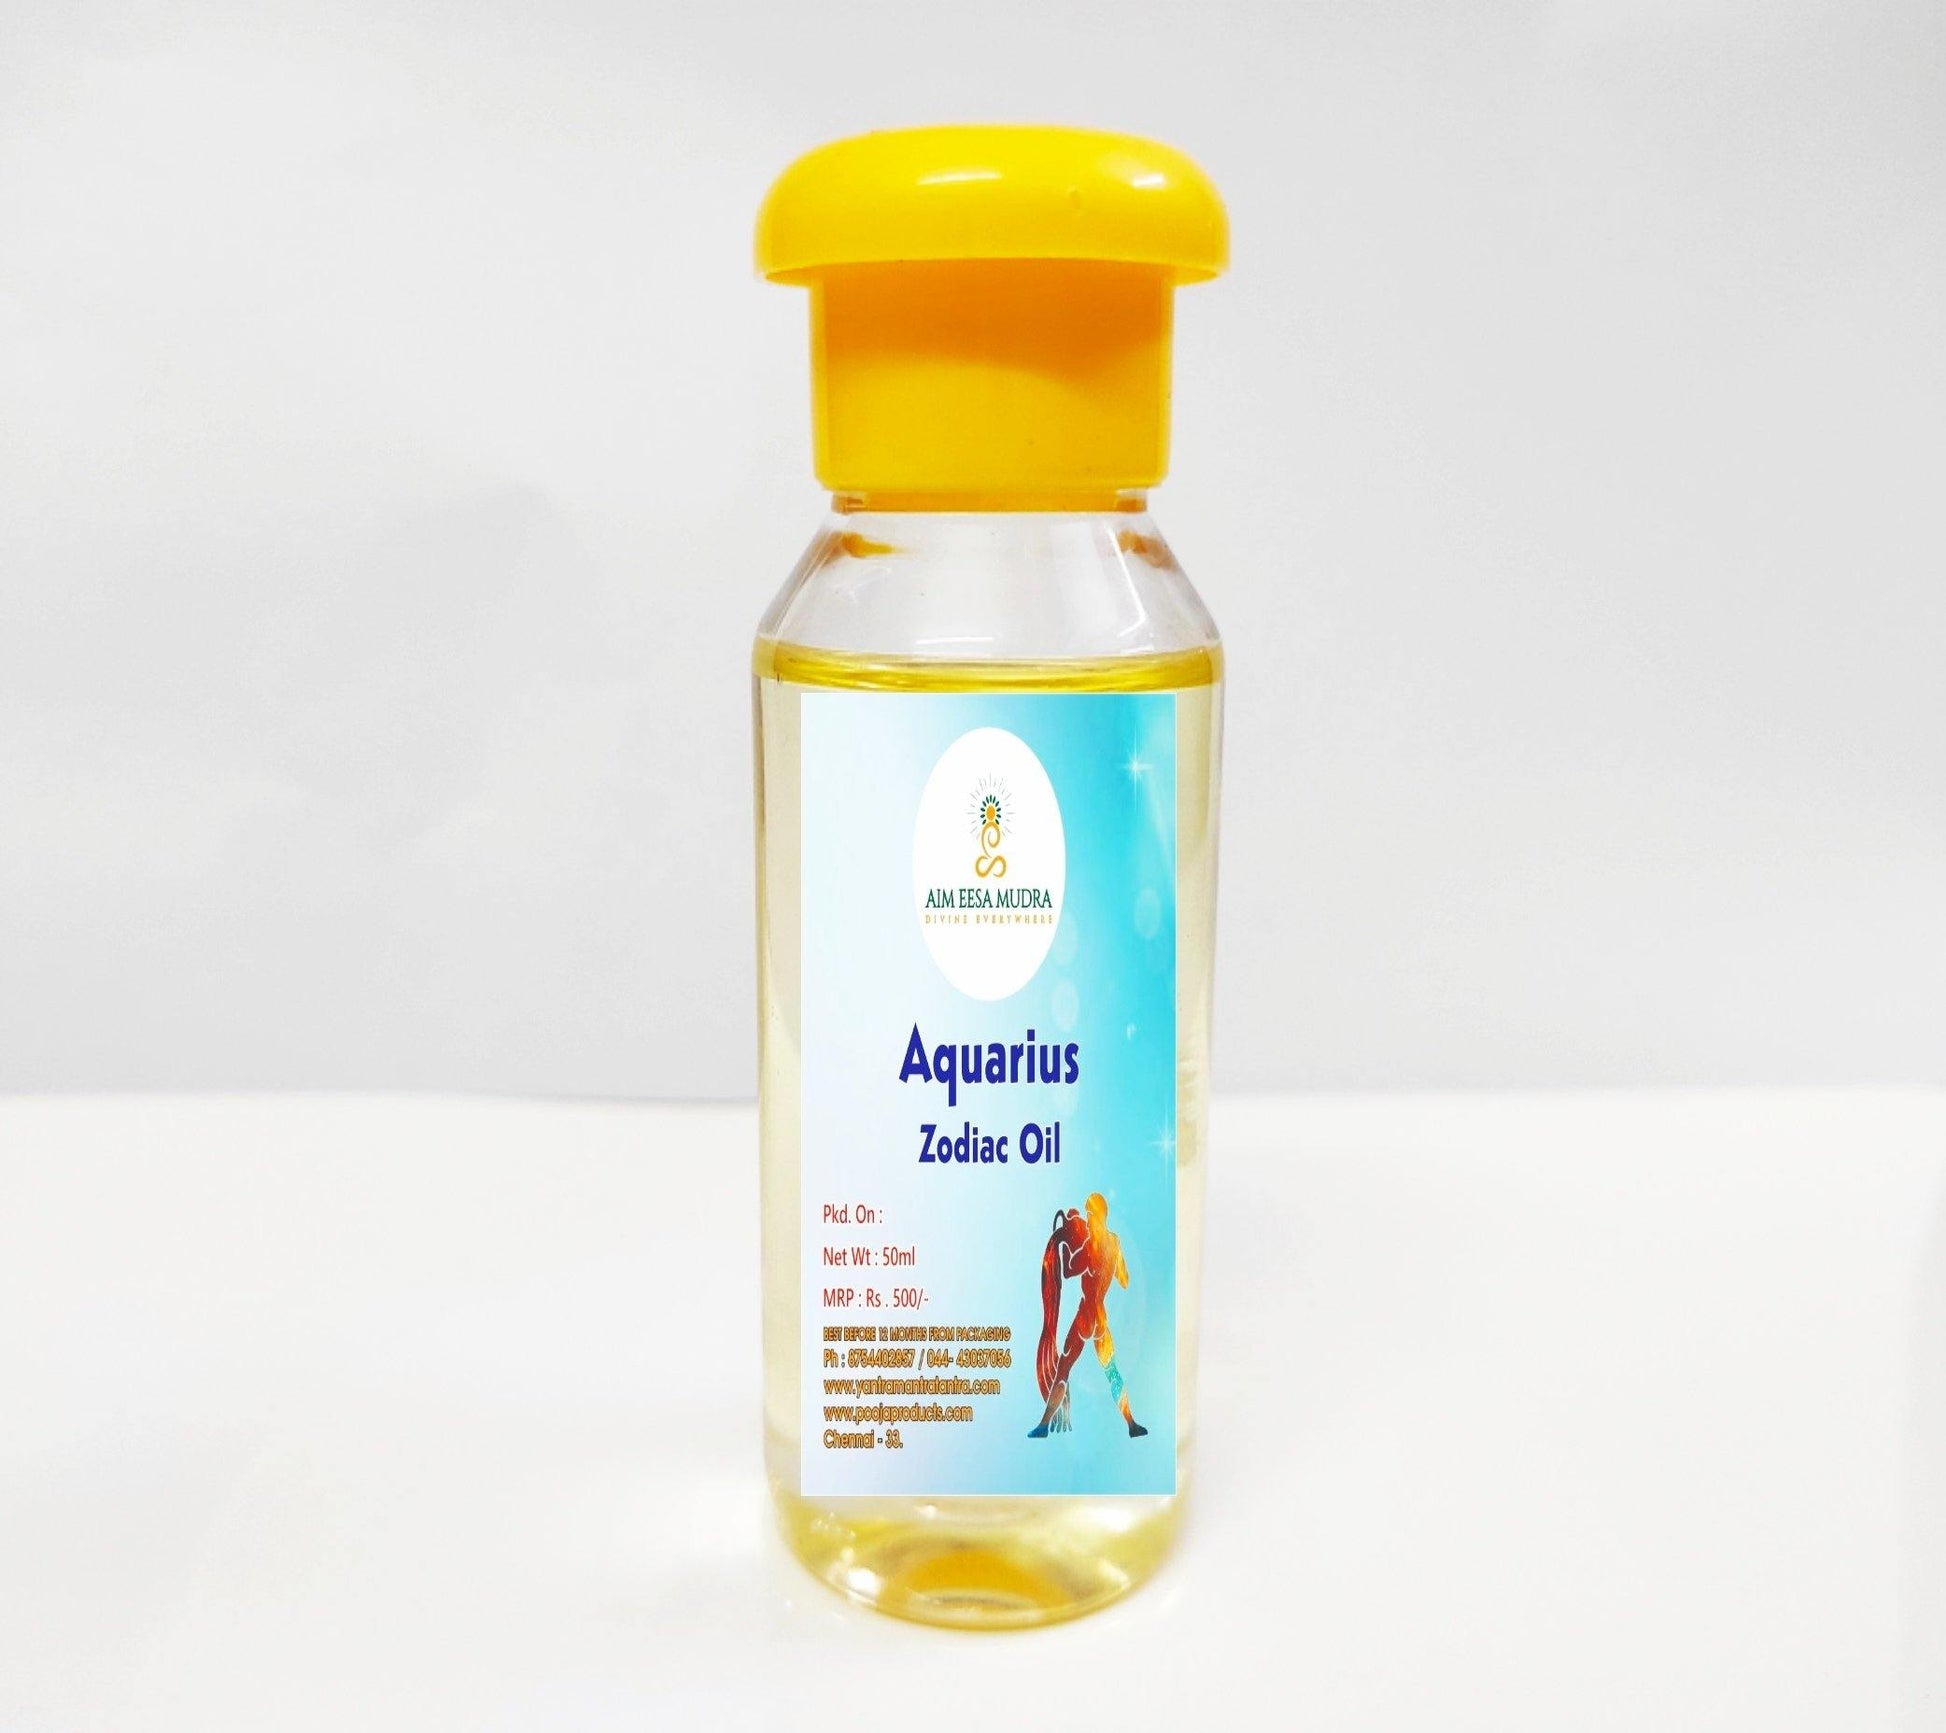 Zodiac Oil Aquarius (50ml)  (𝗧𝗛𝗜𝗦 𝗣𝗥𝗢𝗗𝗨𝗖𝗧 𝗔𝗩𝗔𝗜𝗟𝗕𝗟𝗘 𝗢𝗡𝗟𝗬 𝗜𝗡𝗦𝗜𝗗𝗘 𝗜𝗡𝗗𝗜𝗔) - PoojaProducts.com